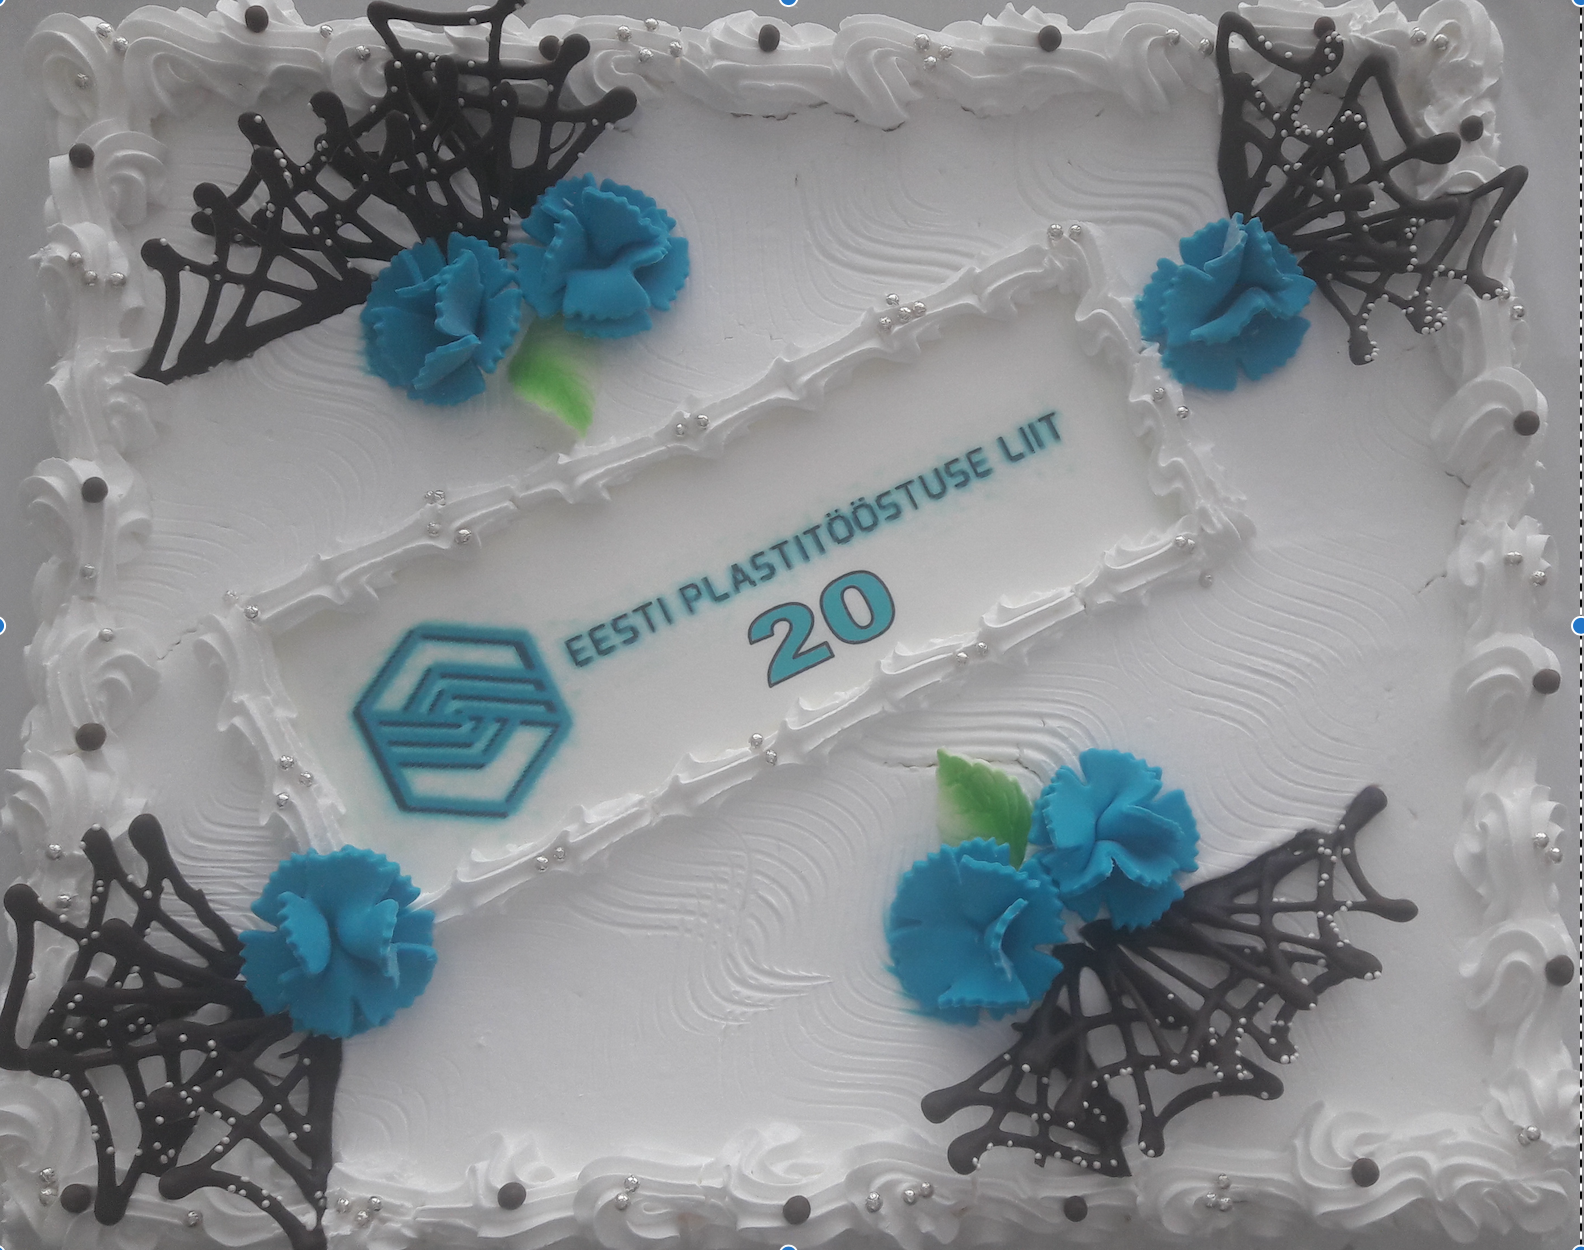 Estonian Plastics Association celebrated 20 anniversary